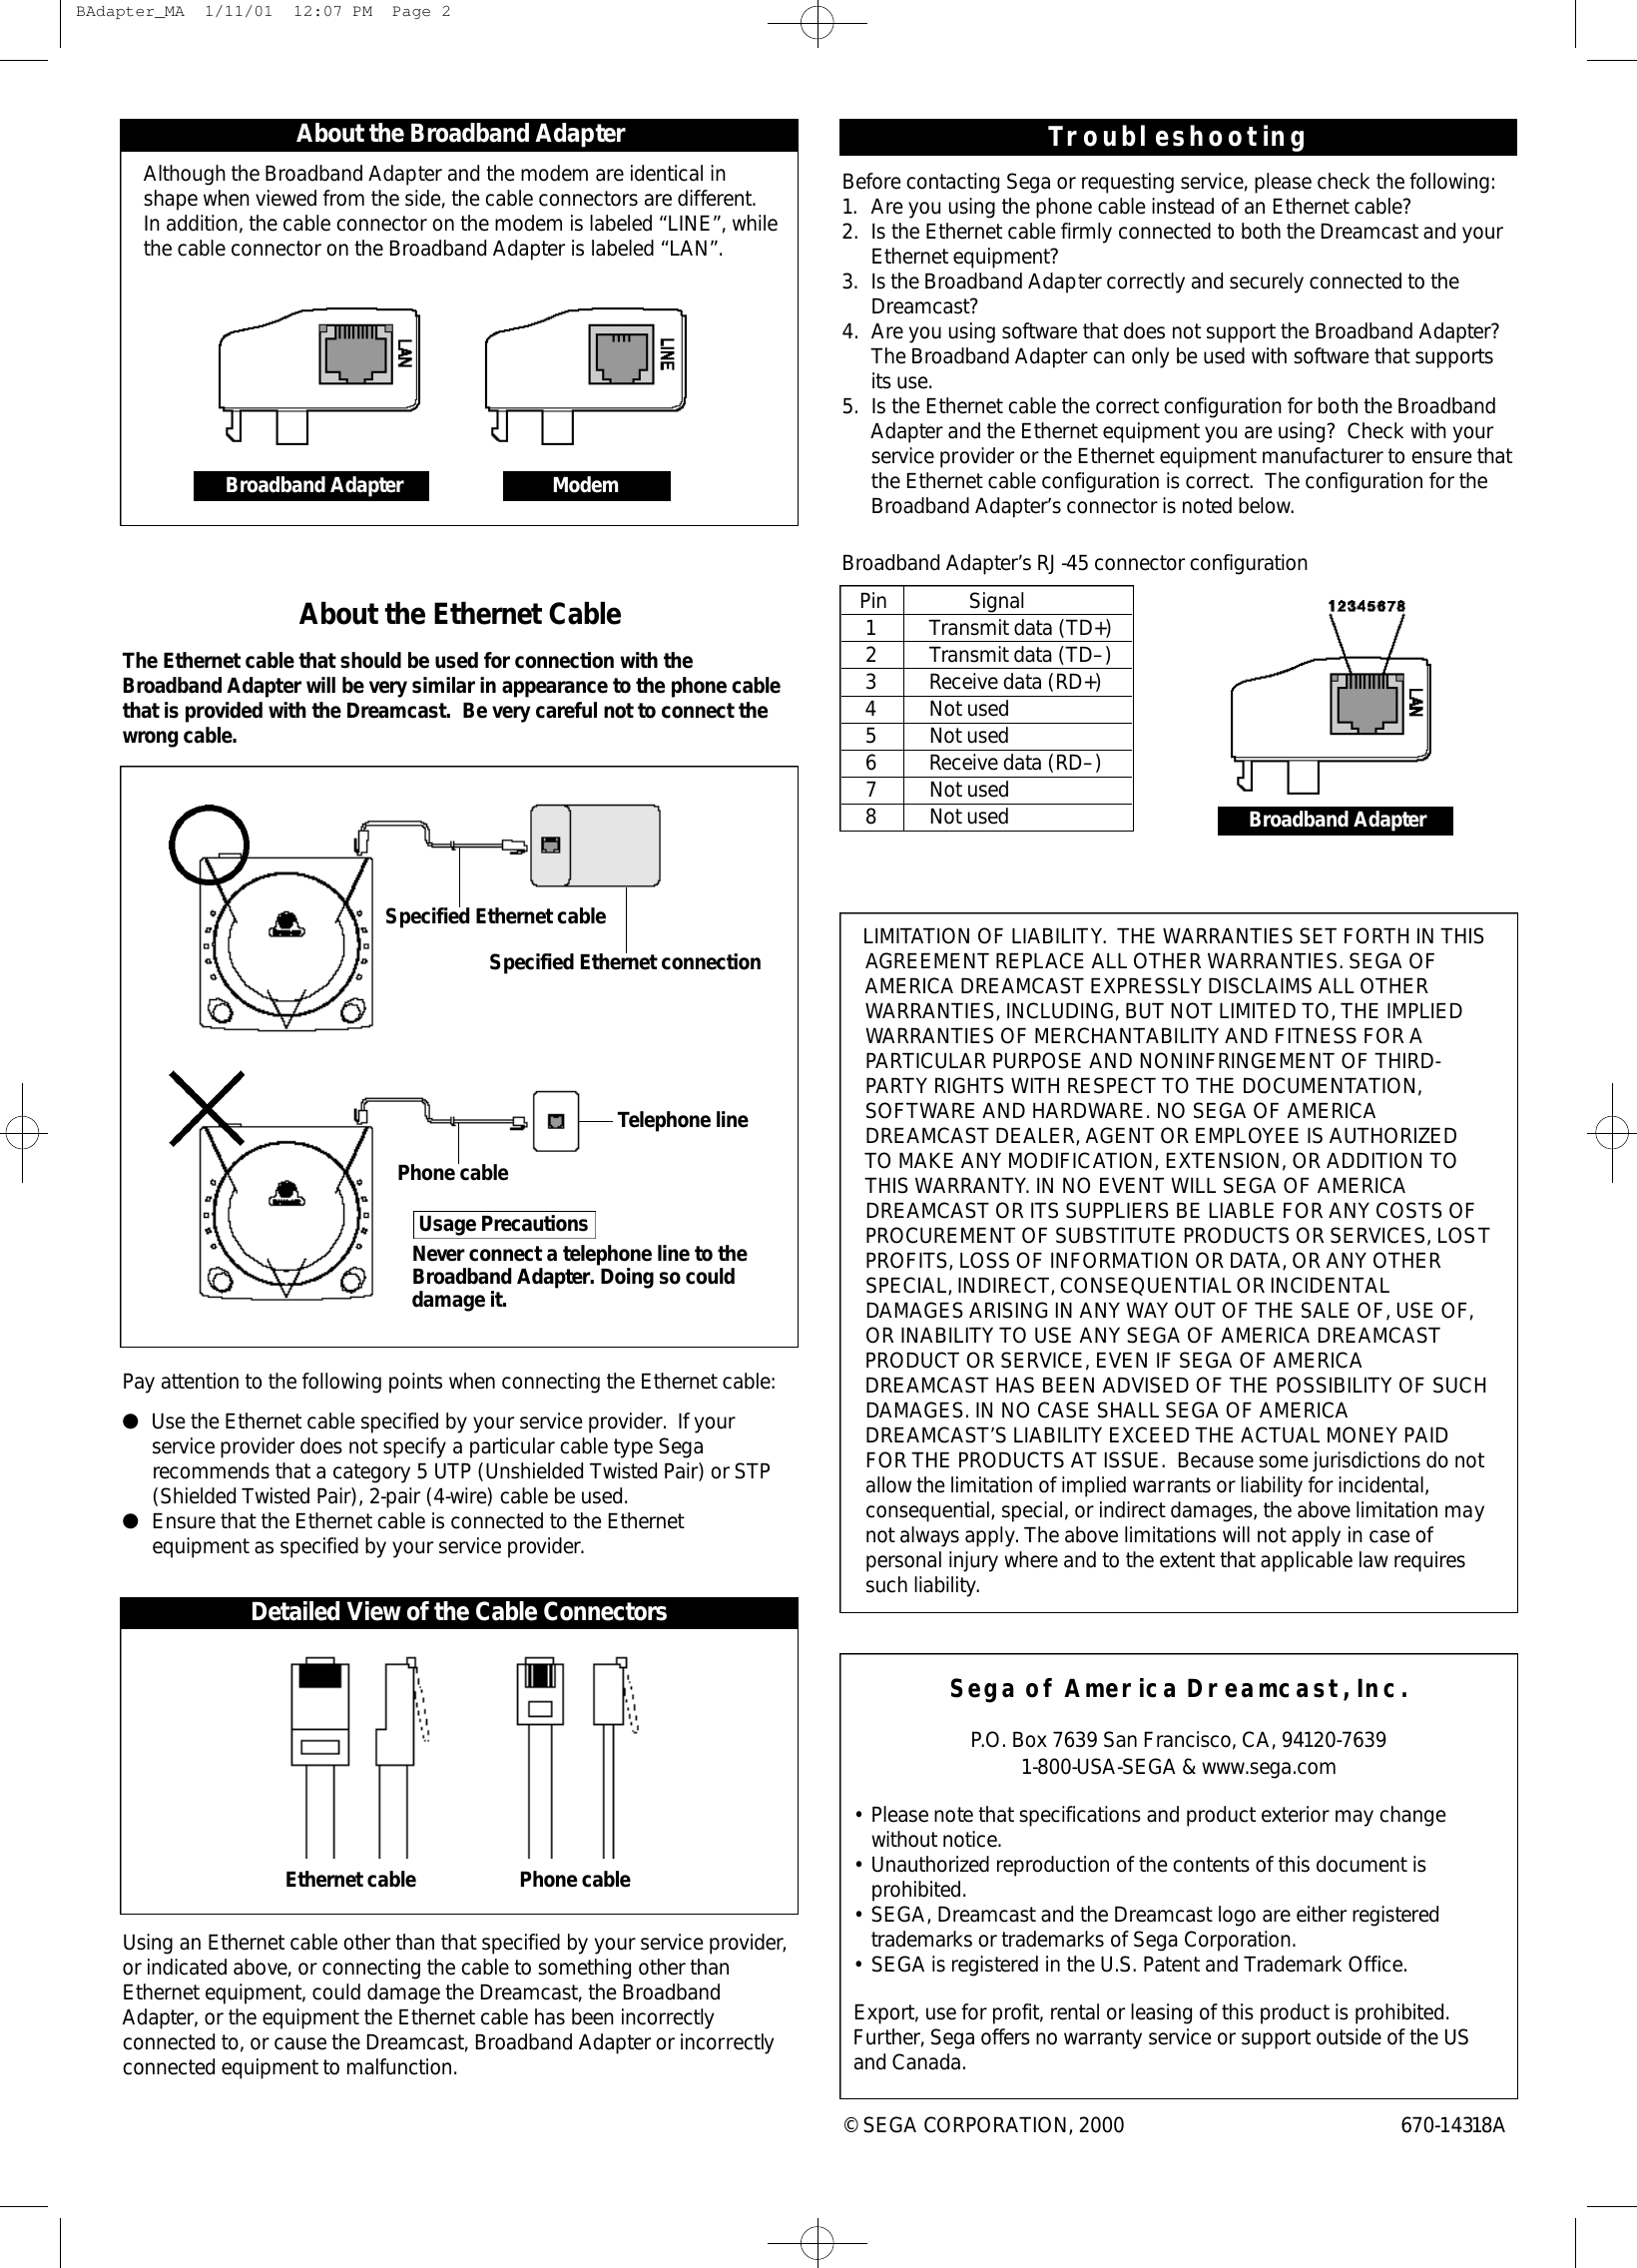 Page 2 of 2 - Broadband Adapter (108K) Manual